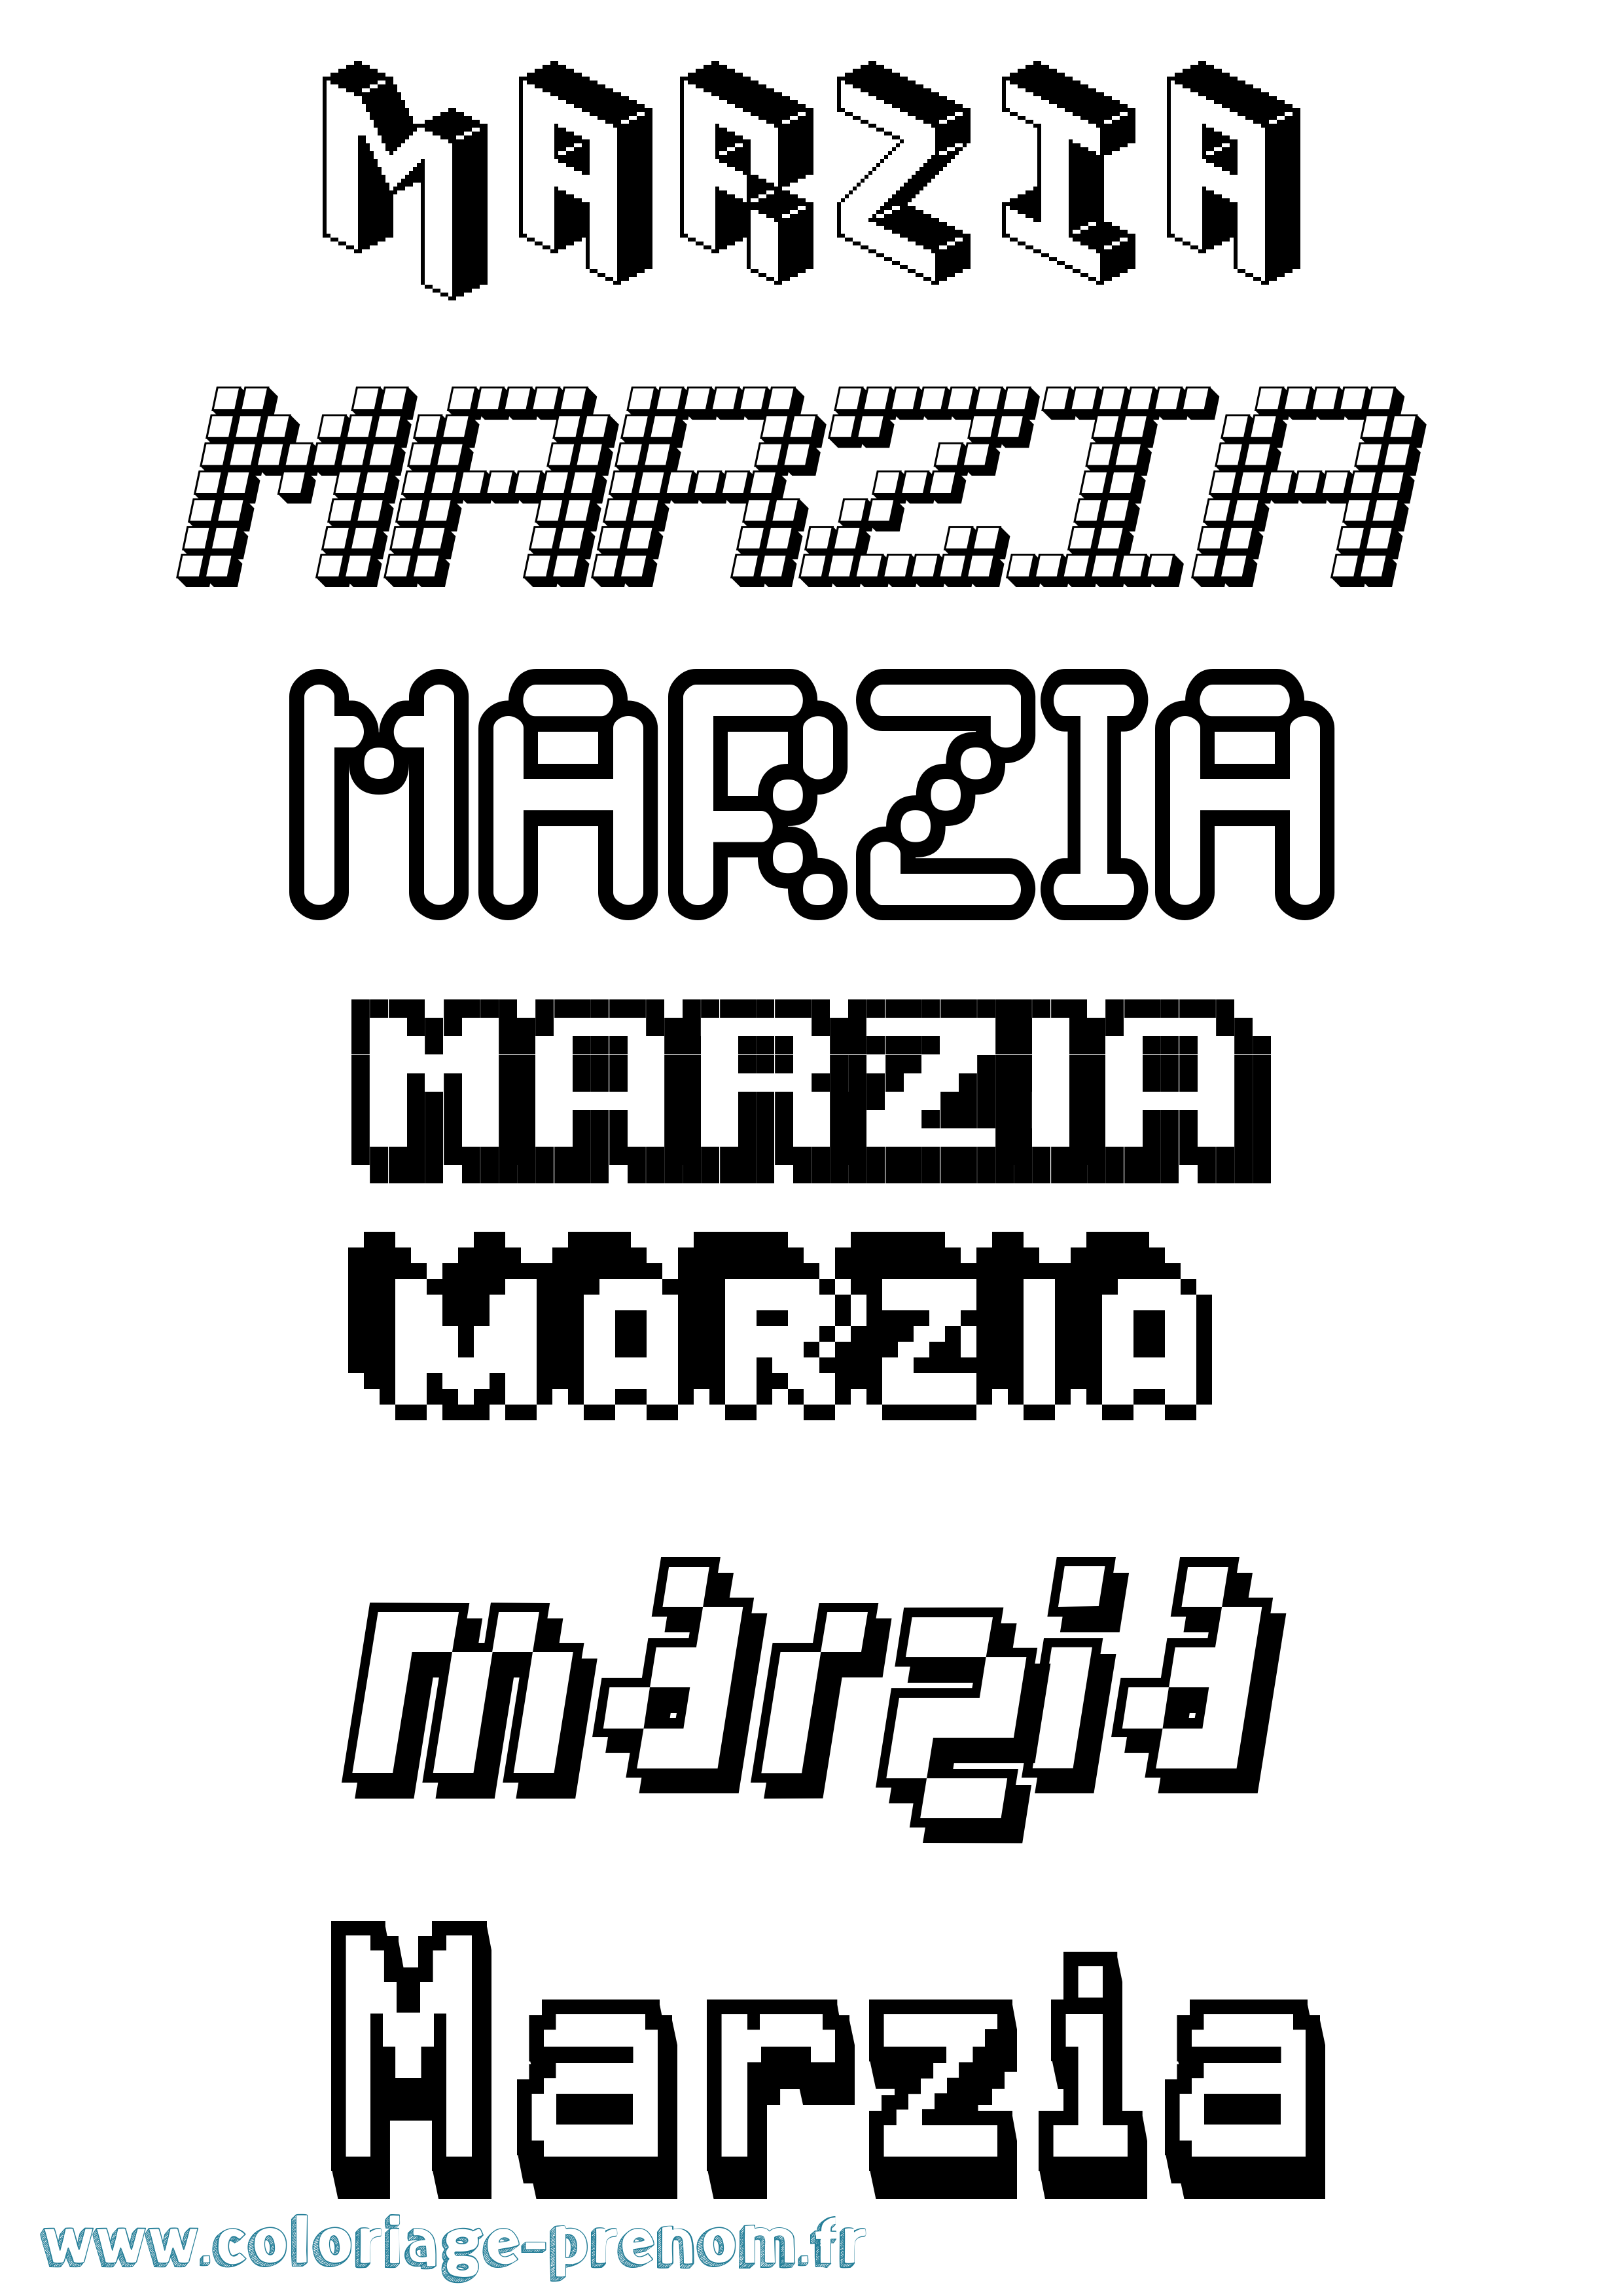 Coloriage prénom Marzia Pixel